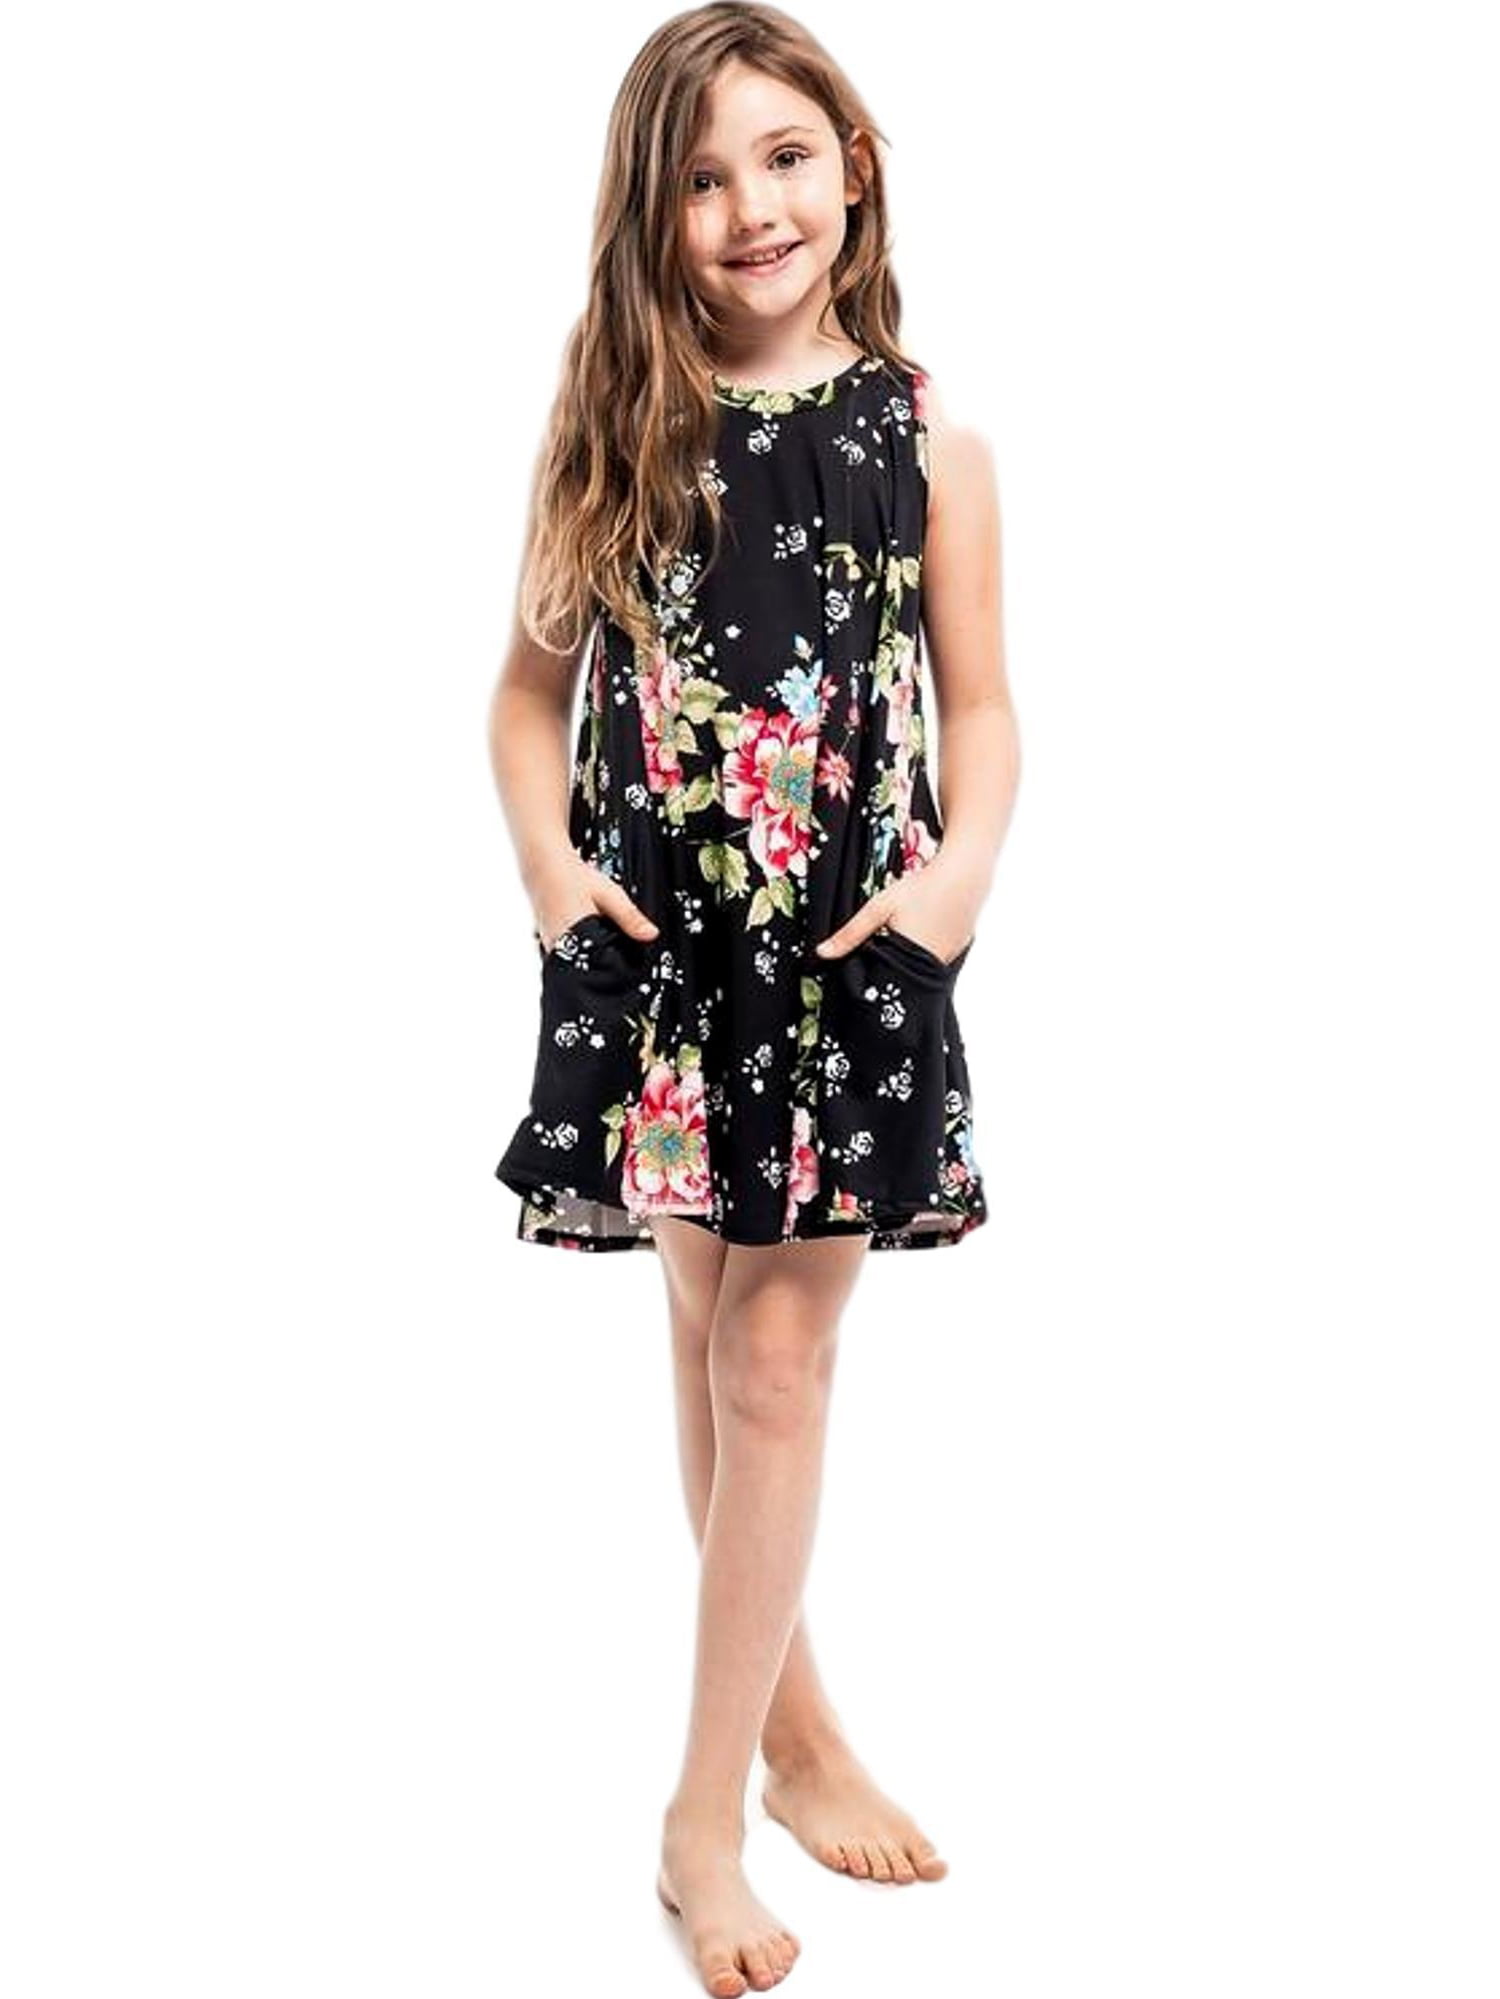 Girls Floral Printed Dress, Black - Walmart.com